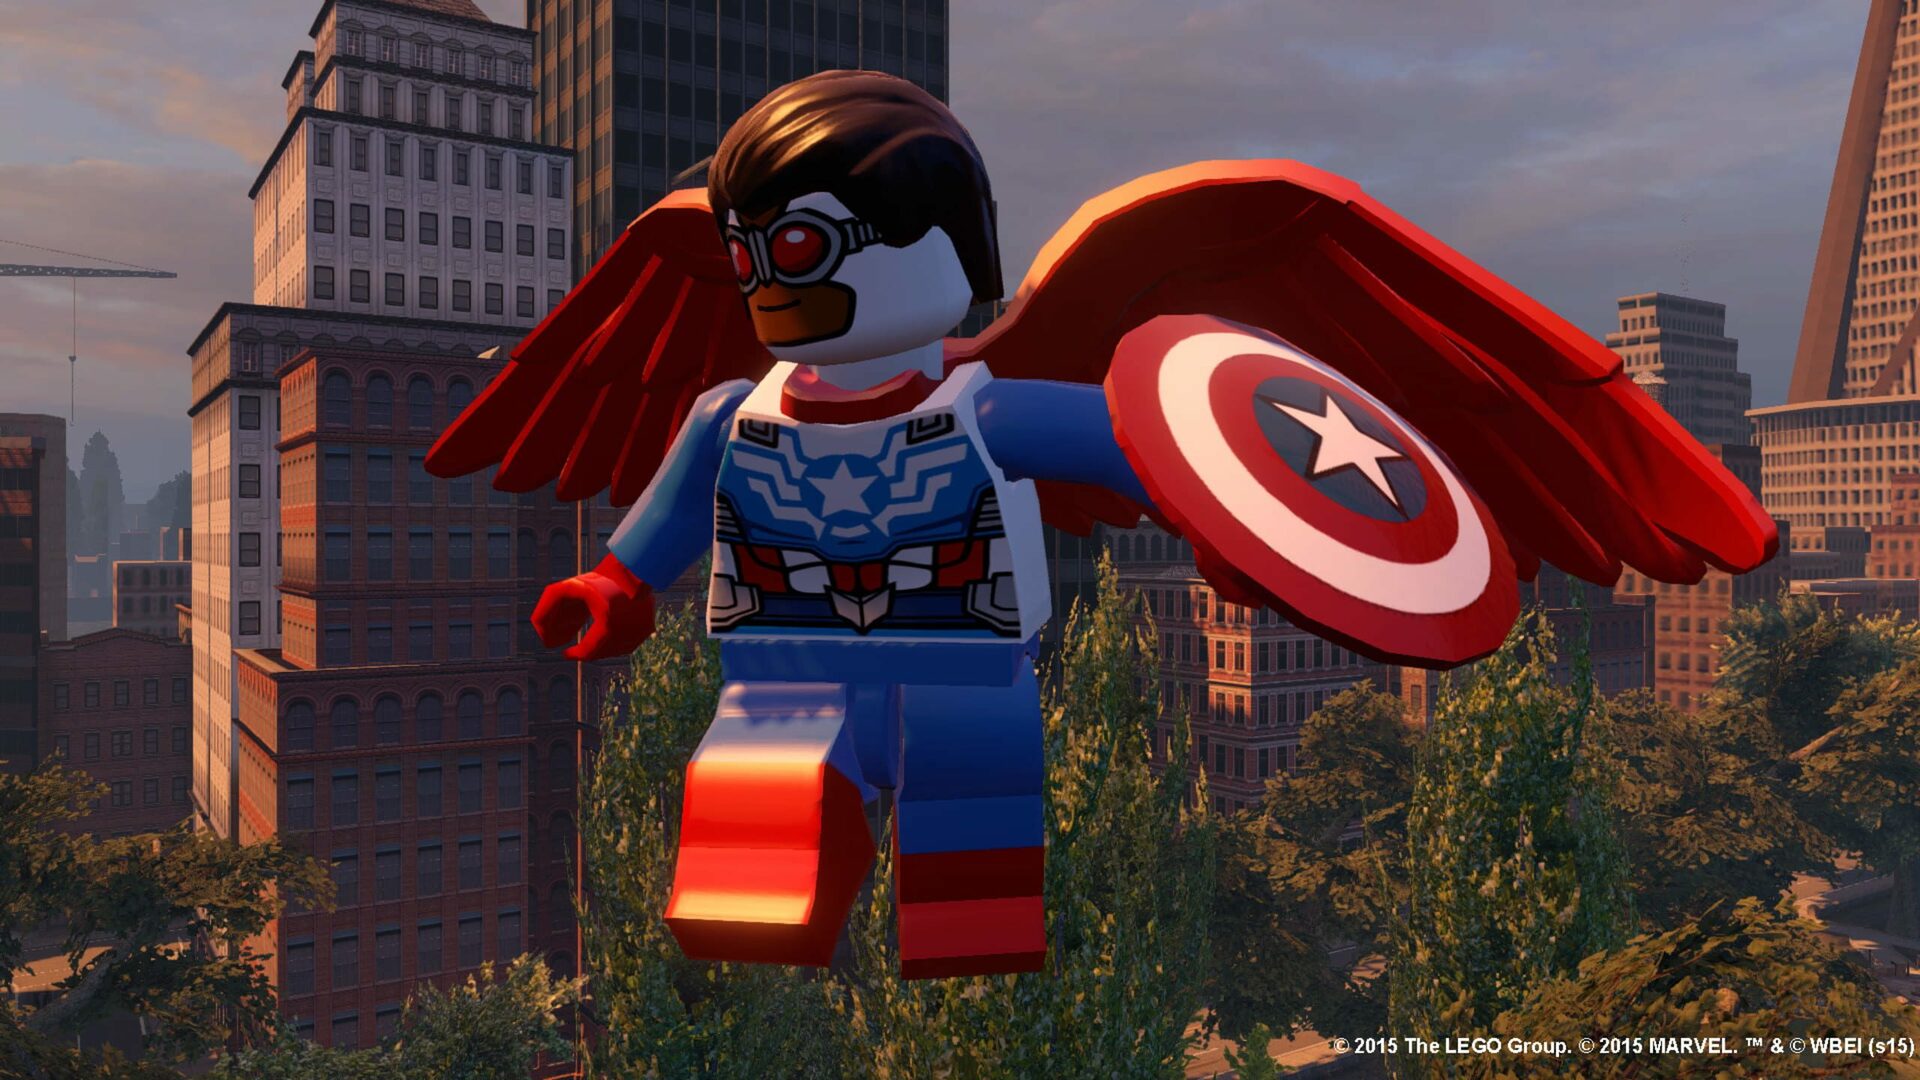 LEGO MARVELs Avengers Season Pass DLC for PC Game Steam Key Region Free